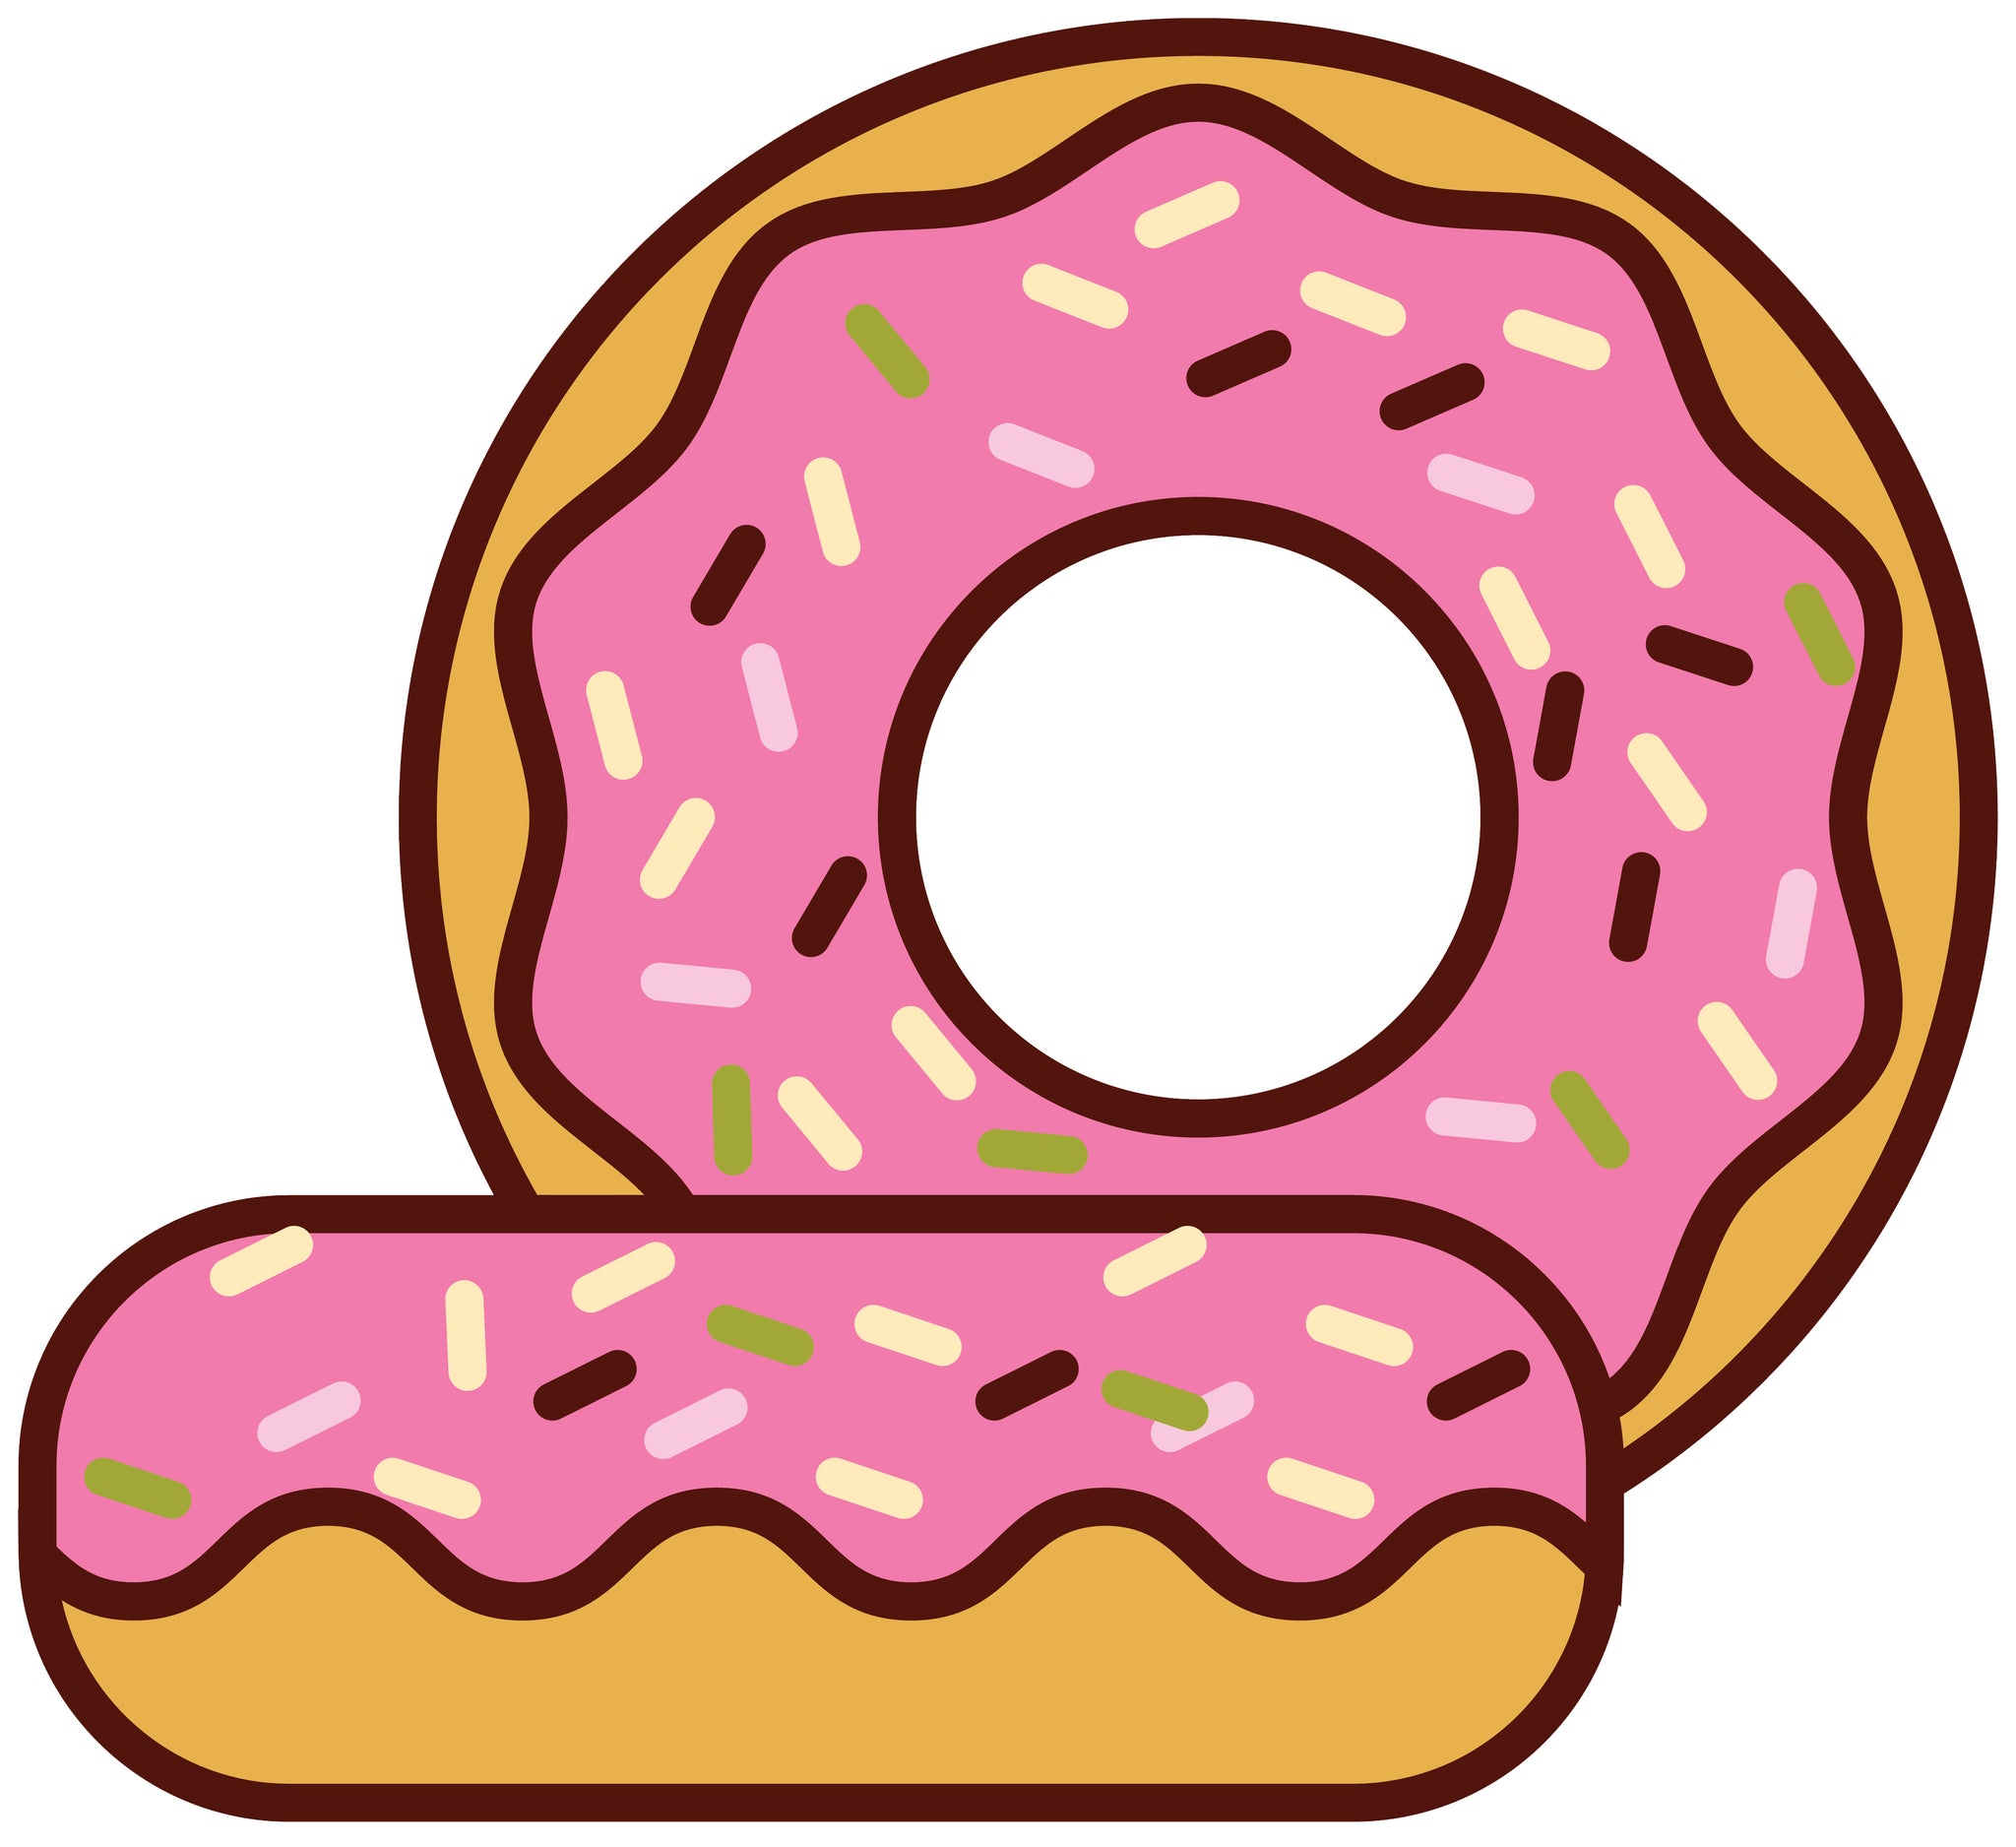 Pink Frosting Sprinkle Donut Duo Cartoon Vinyl Decal Sticker